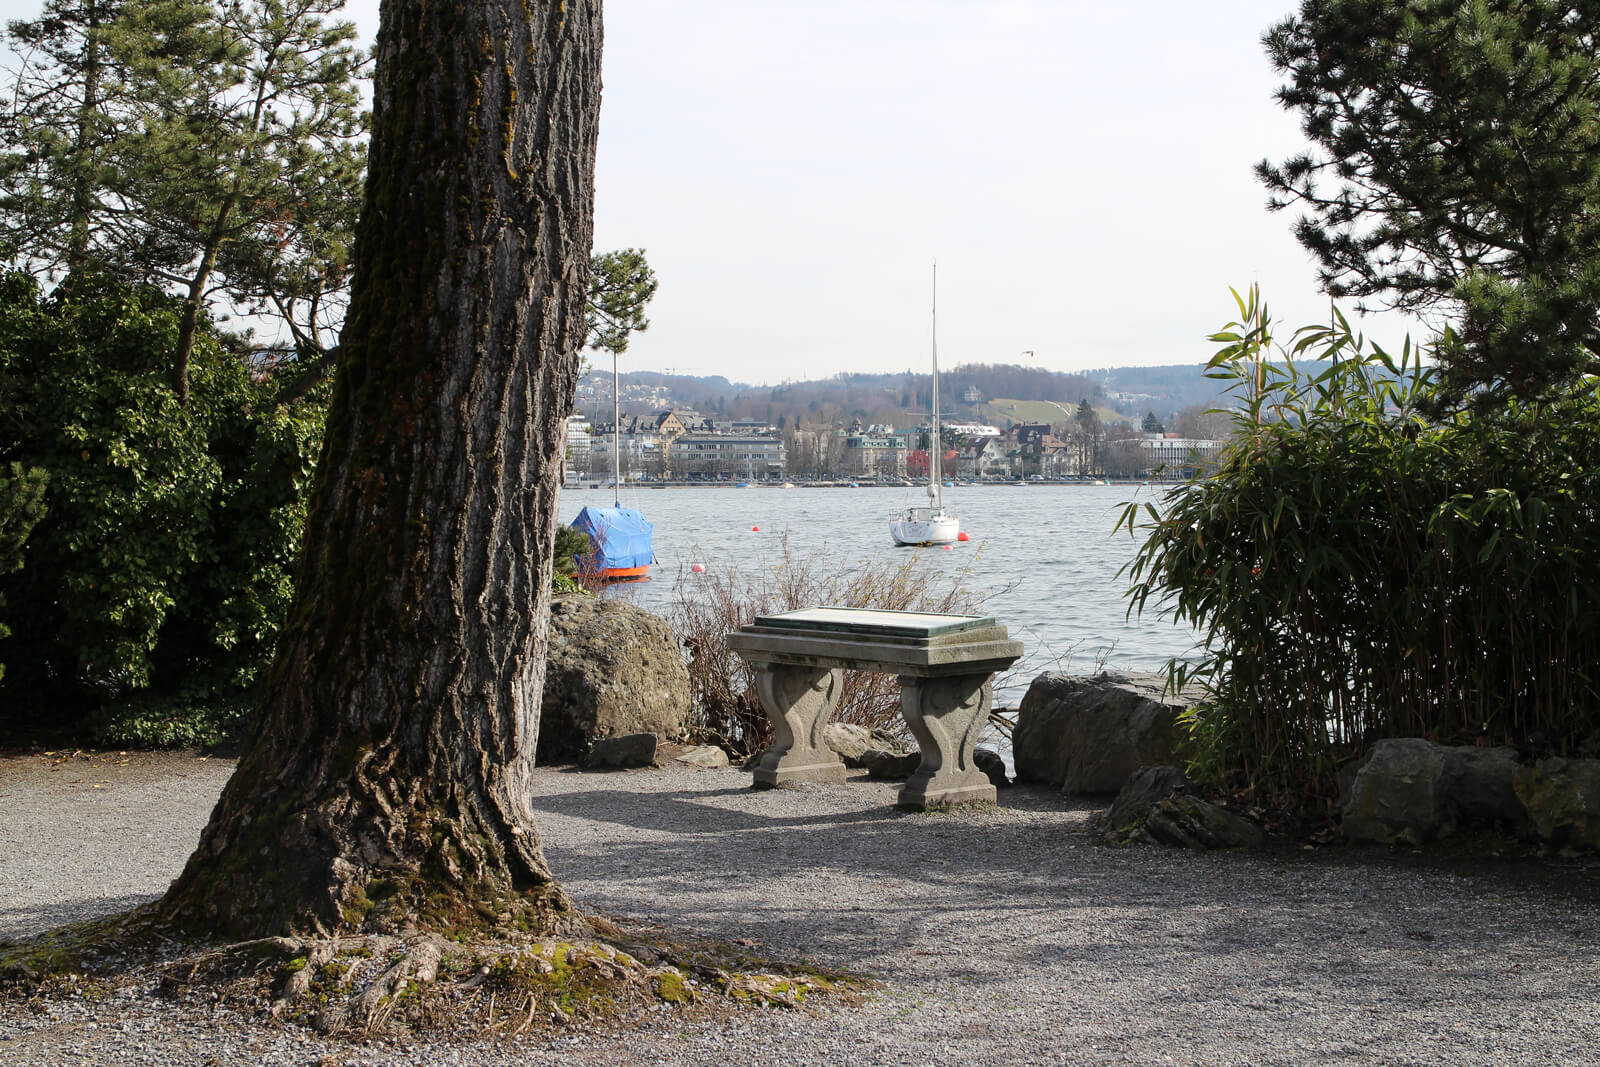 Lake Zurich in February